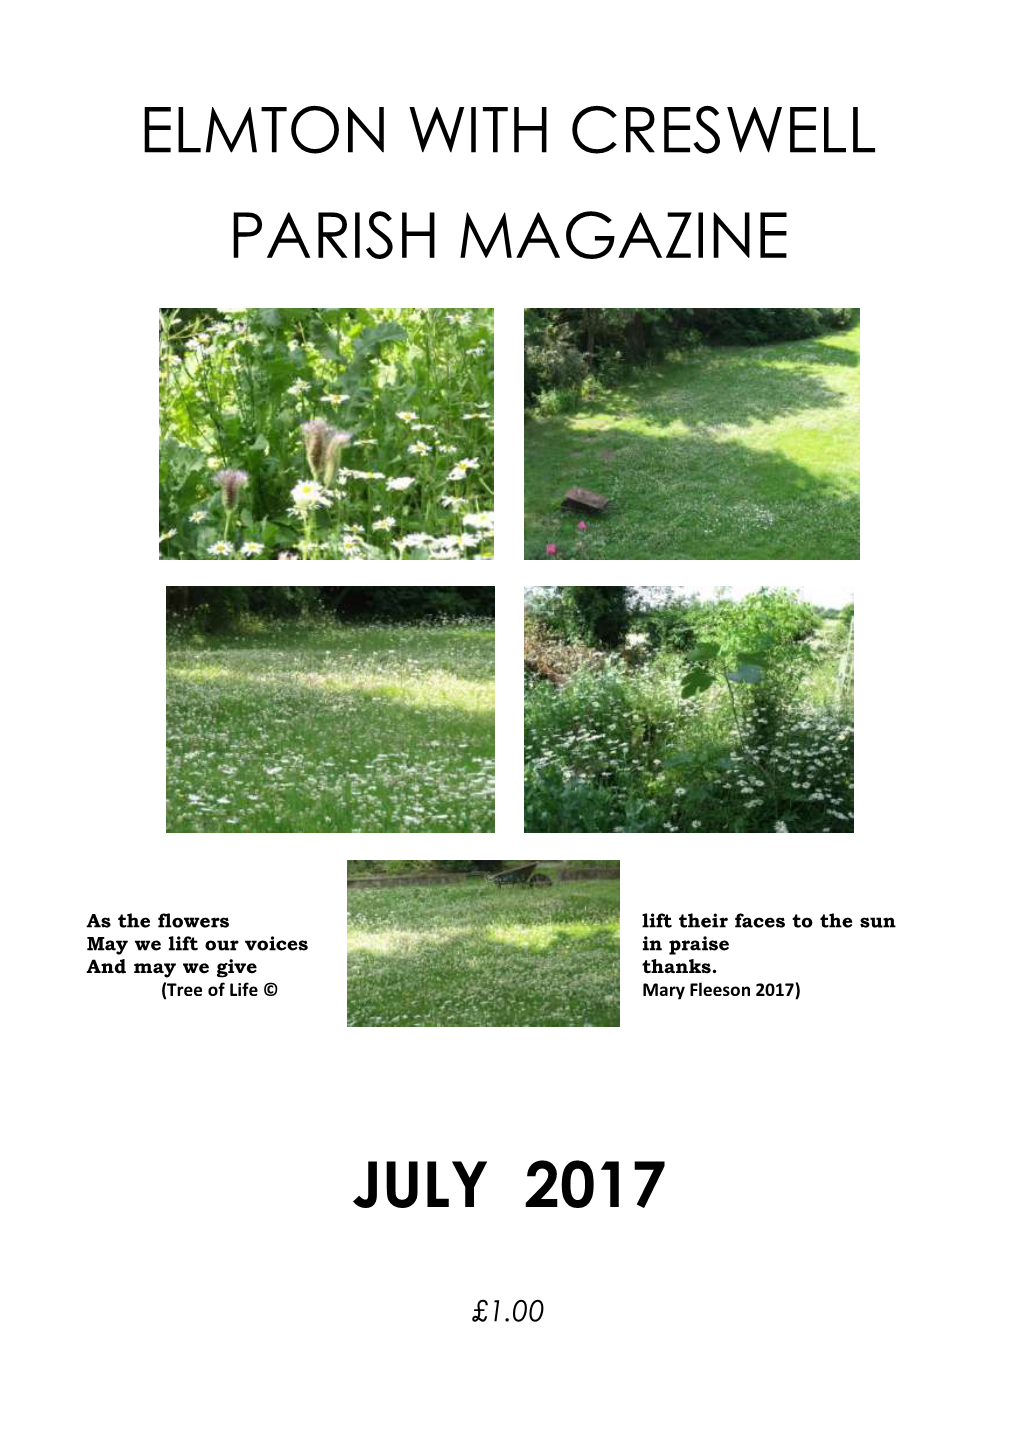 Elmton with Creswell Parish Magazine July 2017